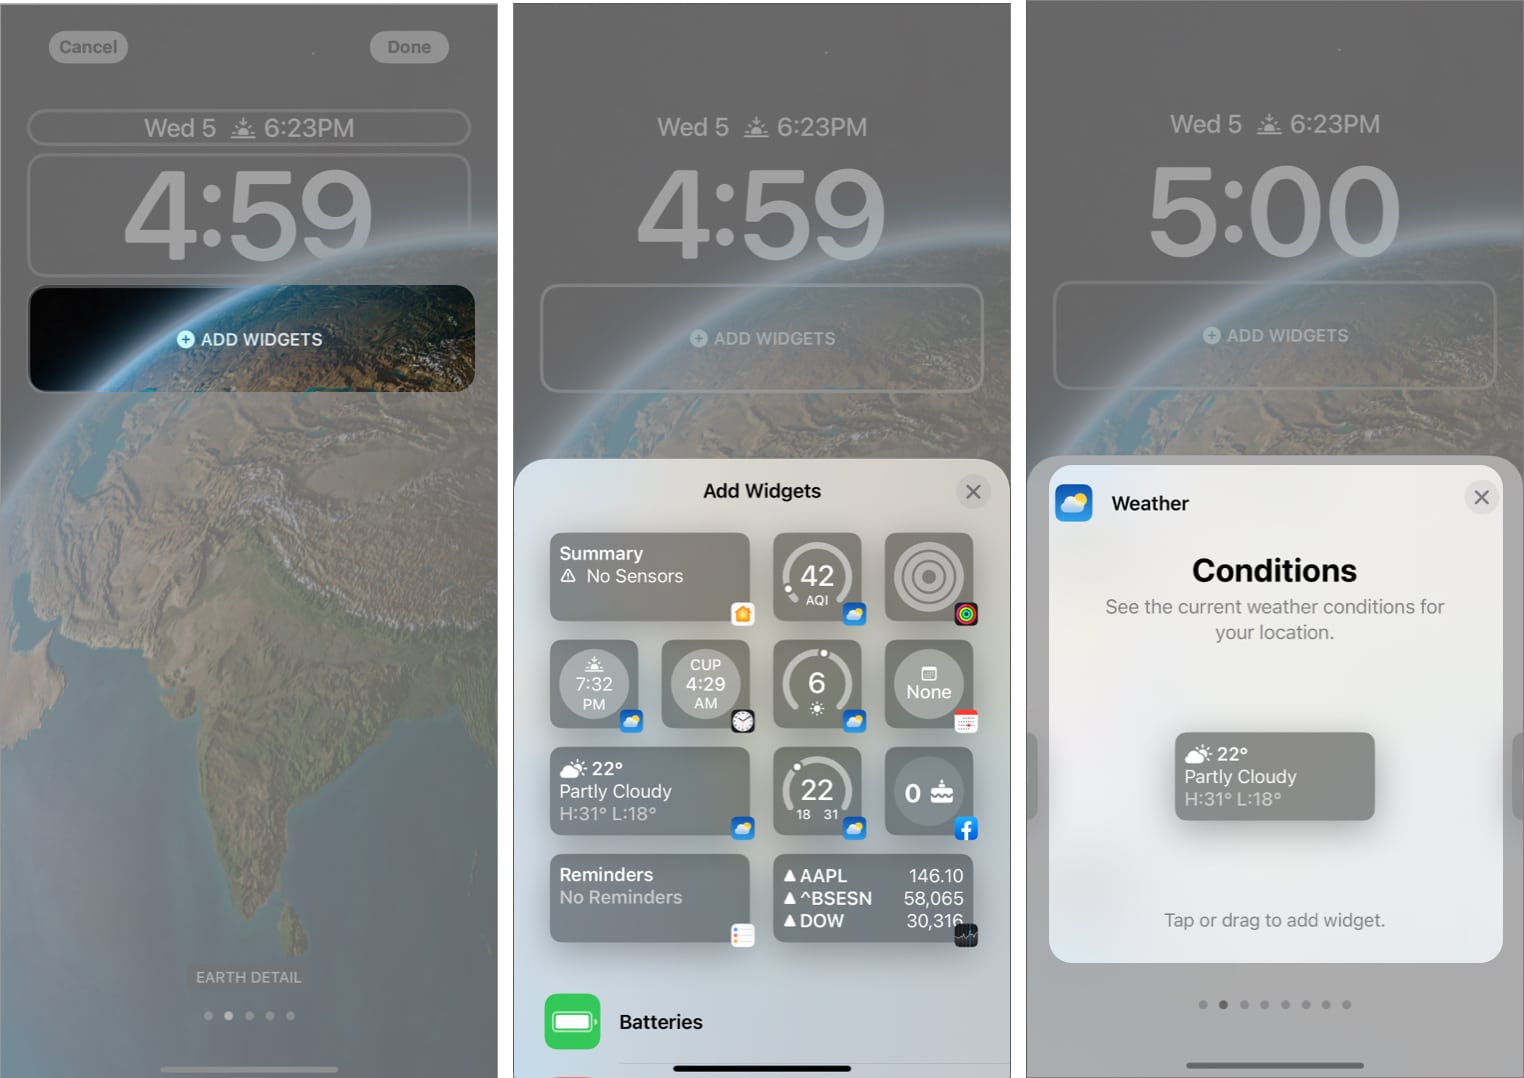 Tap ADD WIDGETS to add weather widgets on iPhone